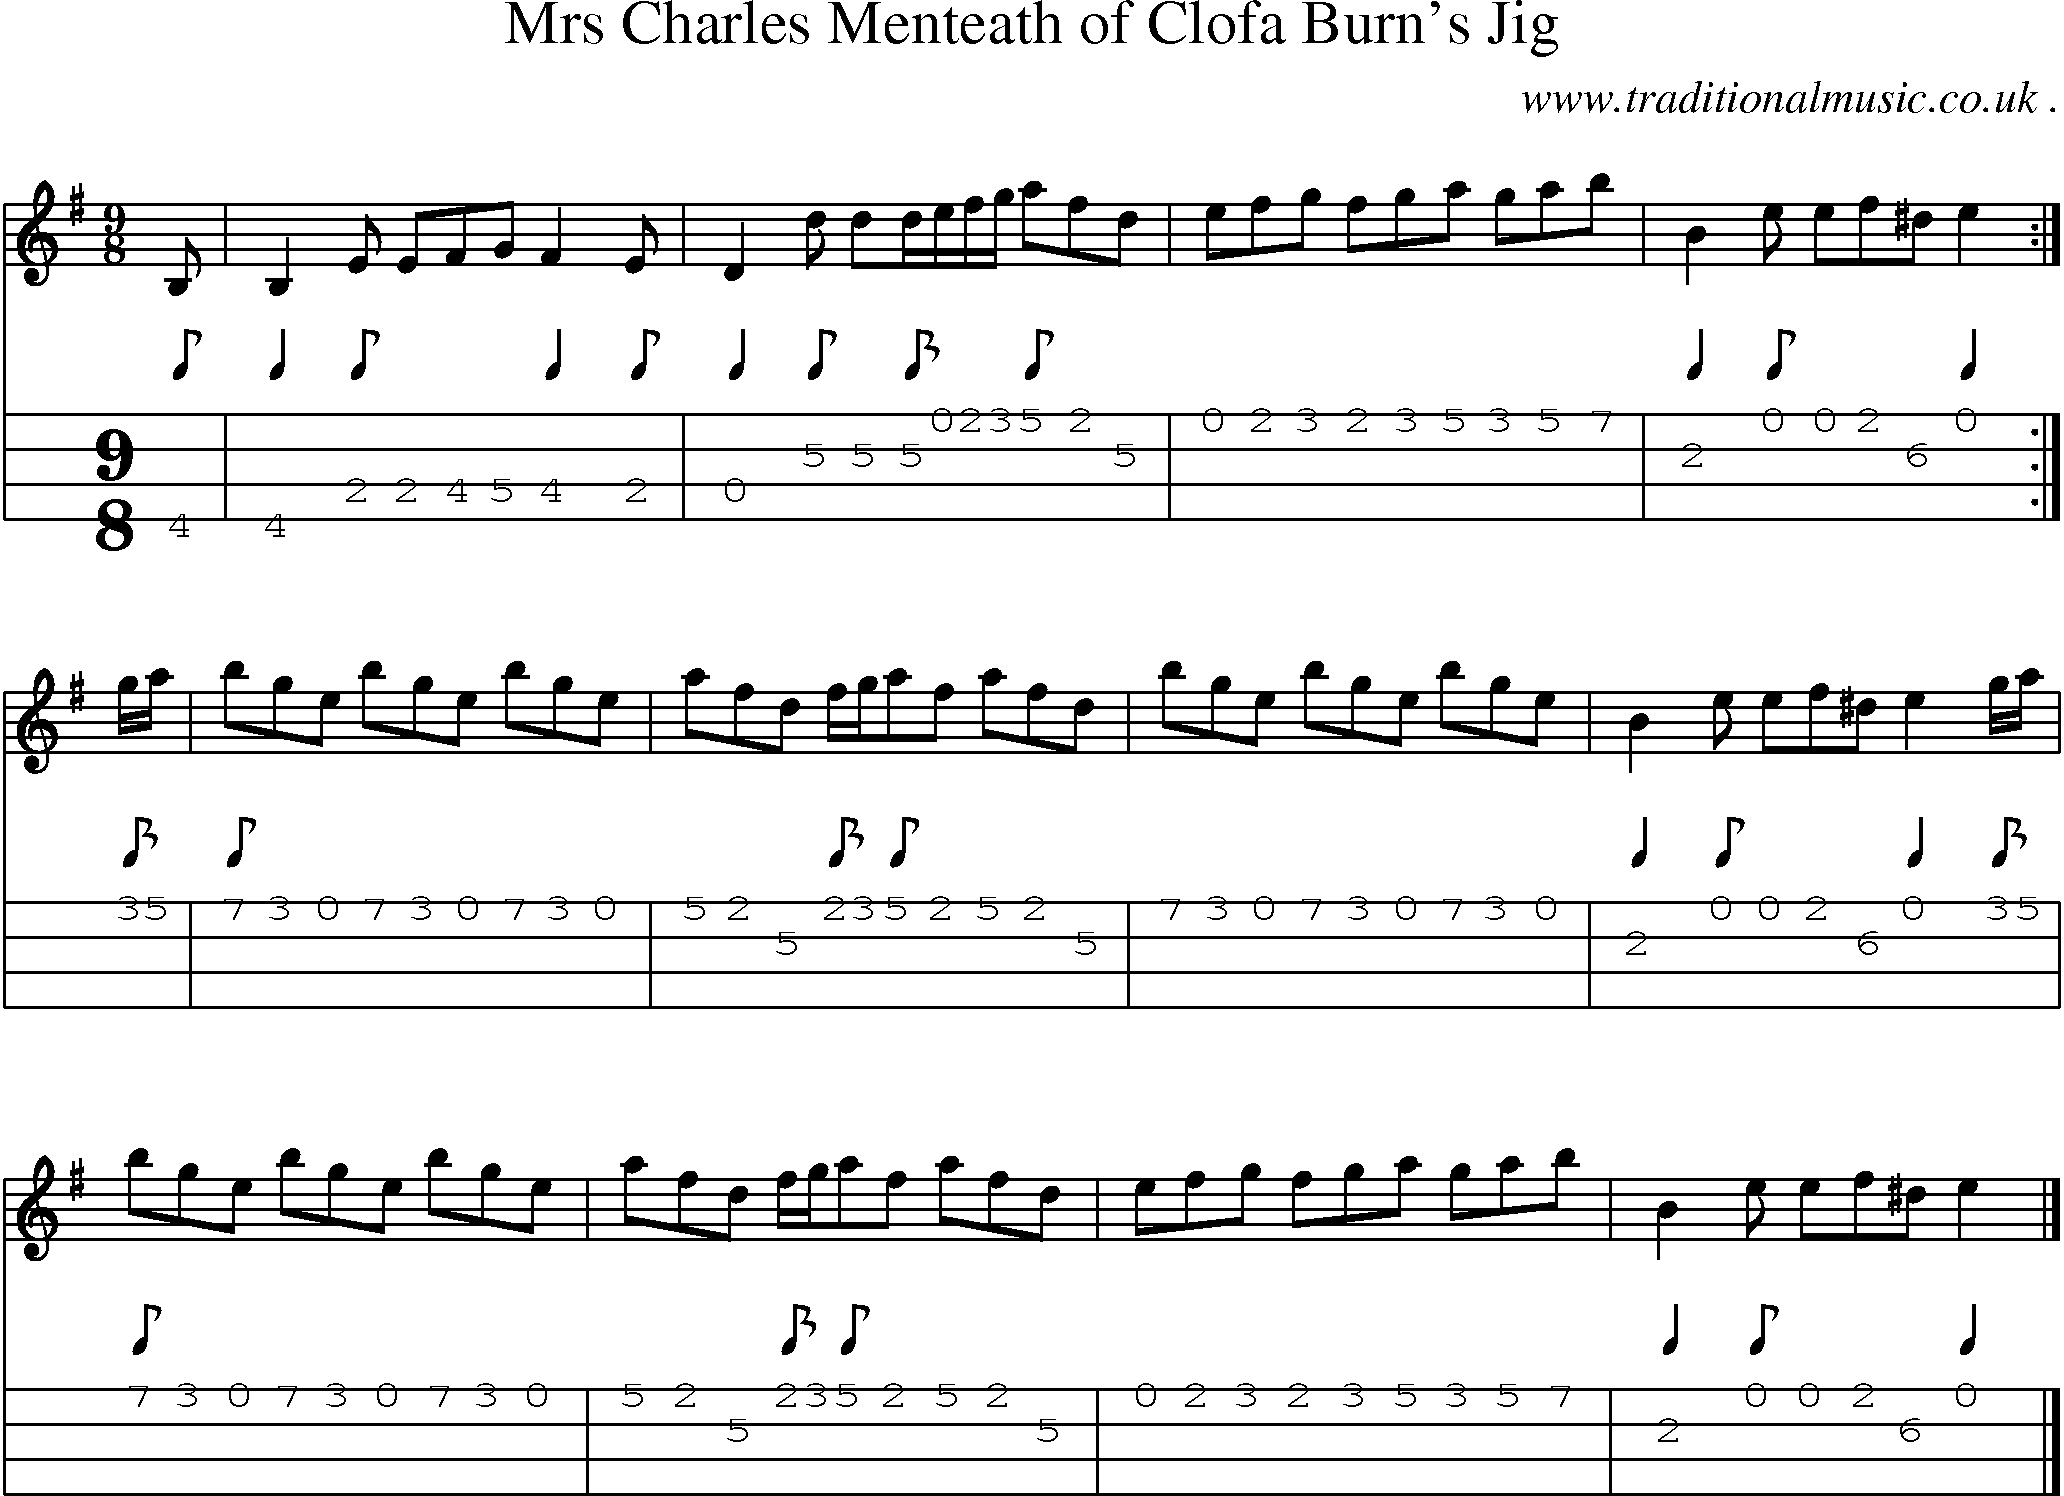 Sheet-music  score, Chords and Mandolin Tabs for Mrs Charles Menteath Of Clofa Burns Jig